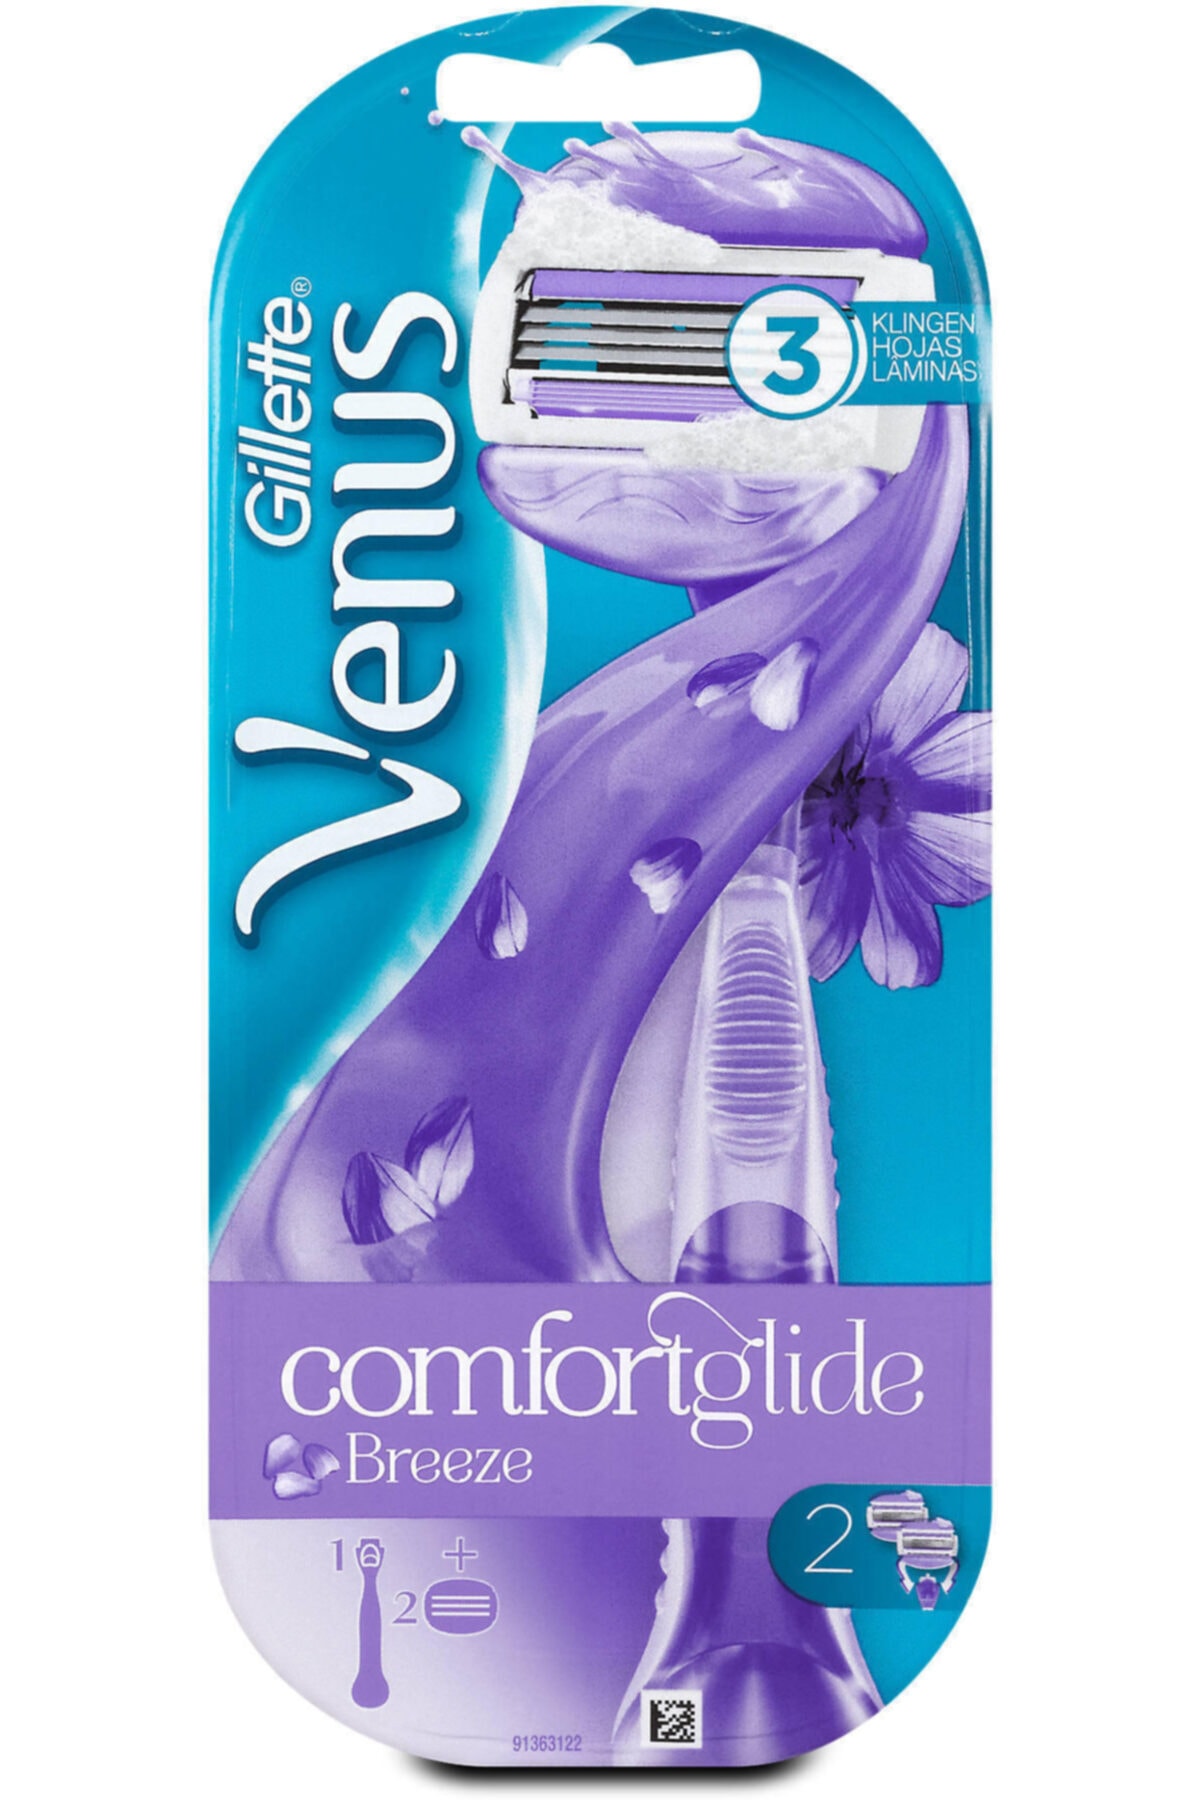 Gillette Venus Venus Breeze Comfort Gilide Tıraş Makinesi